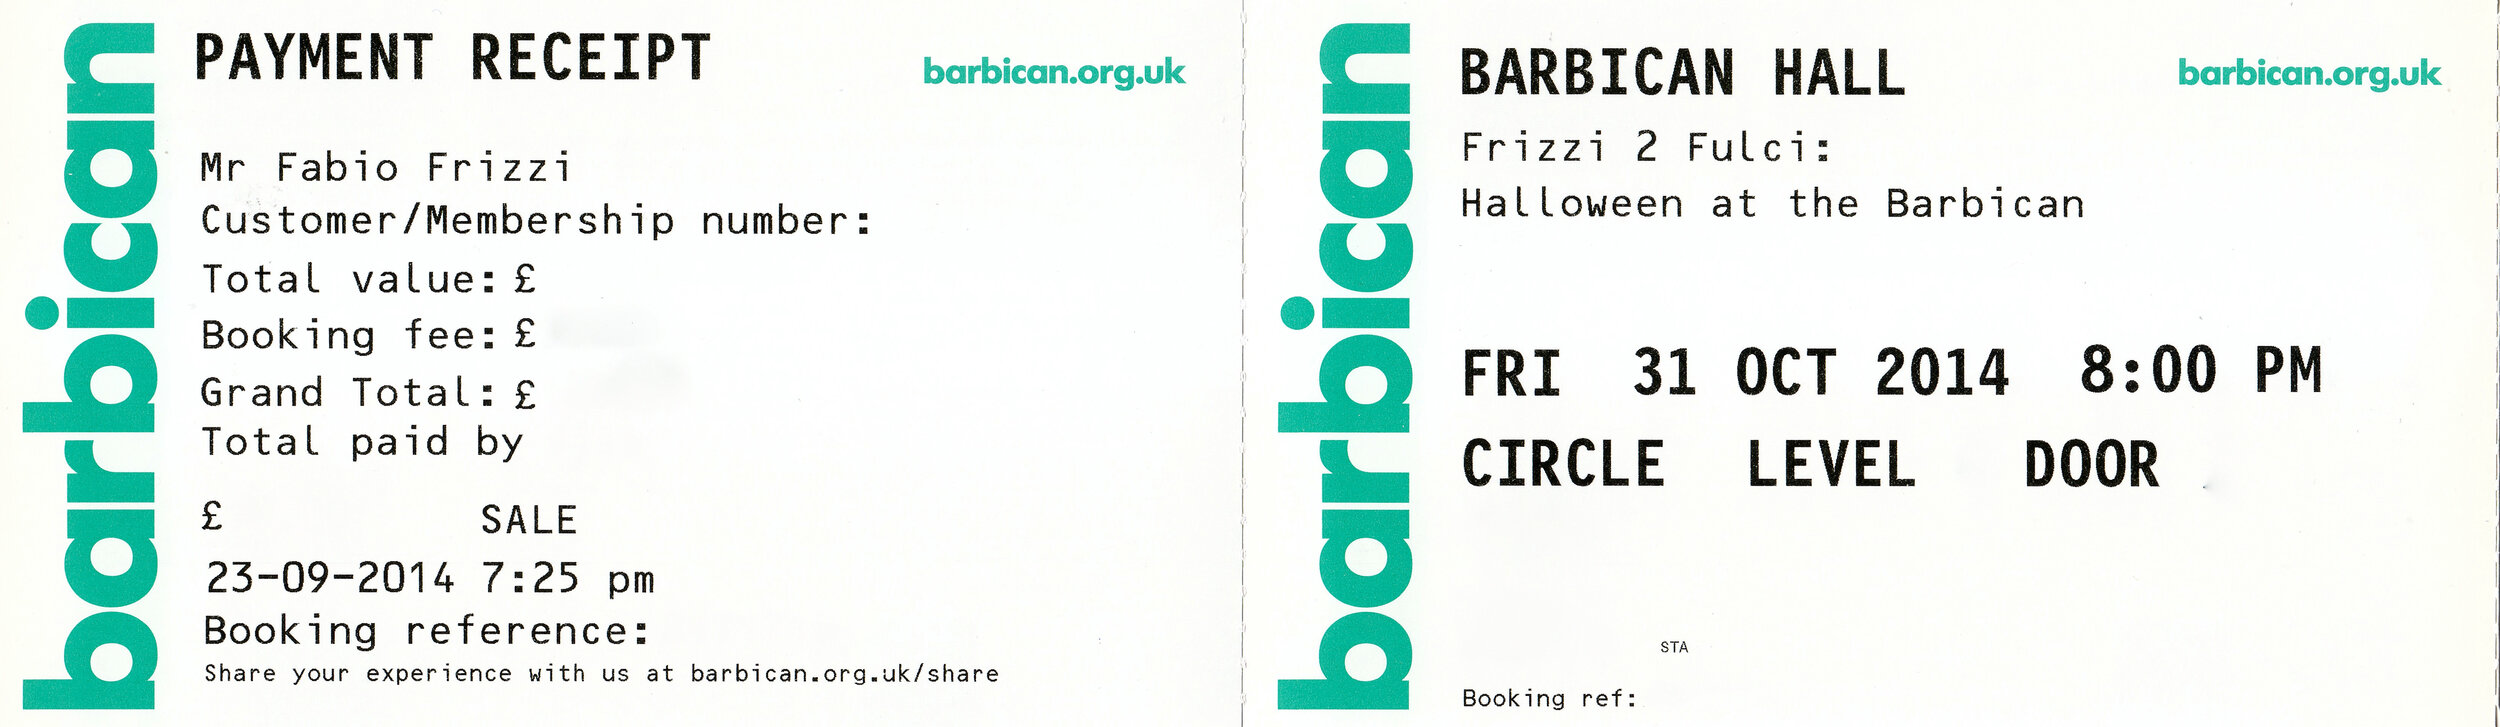 Barbican Ticket 4 ok.jpg